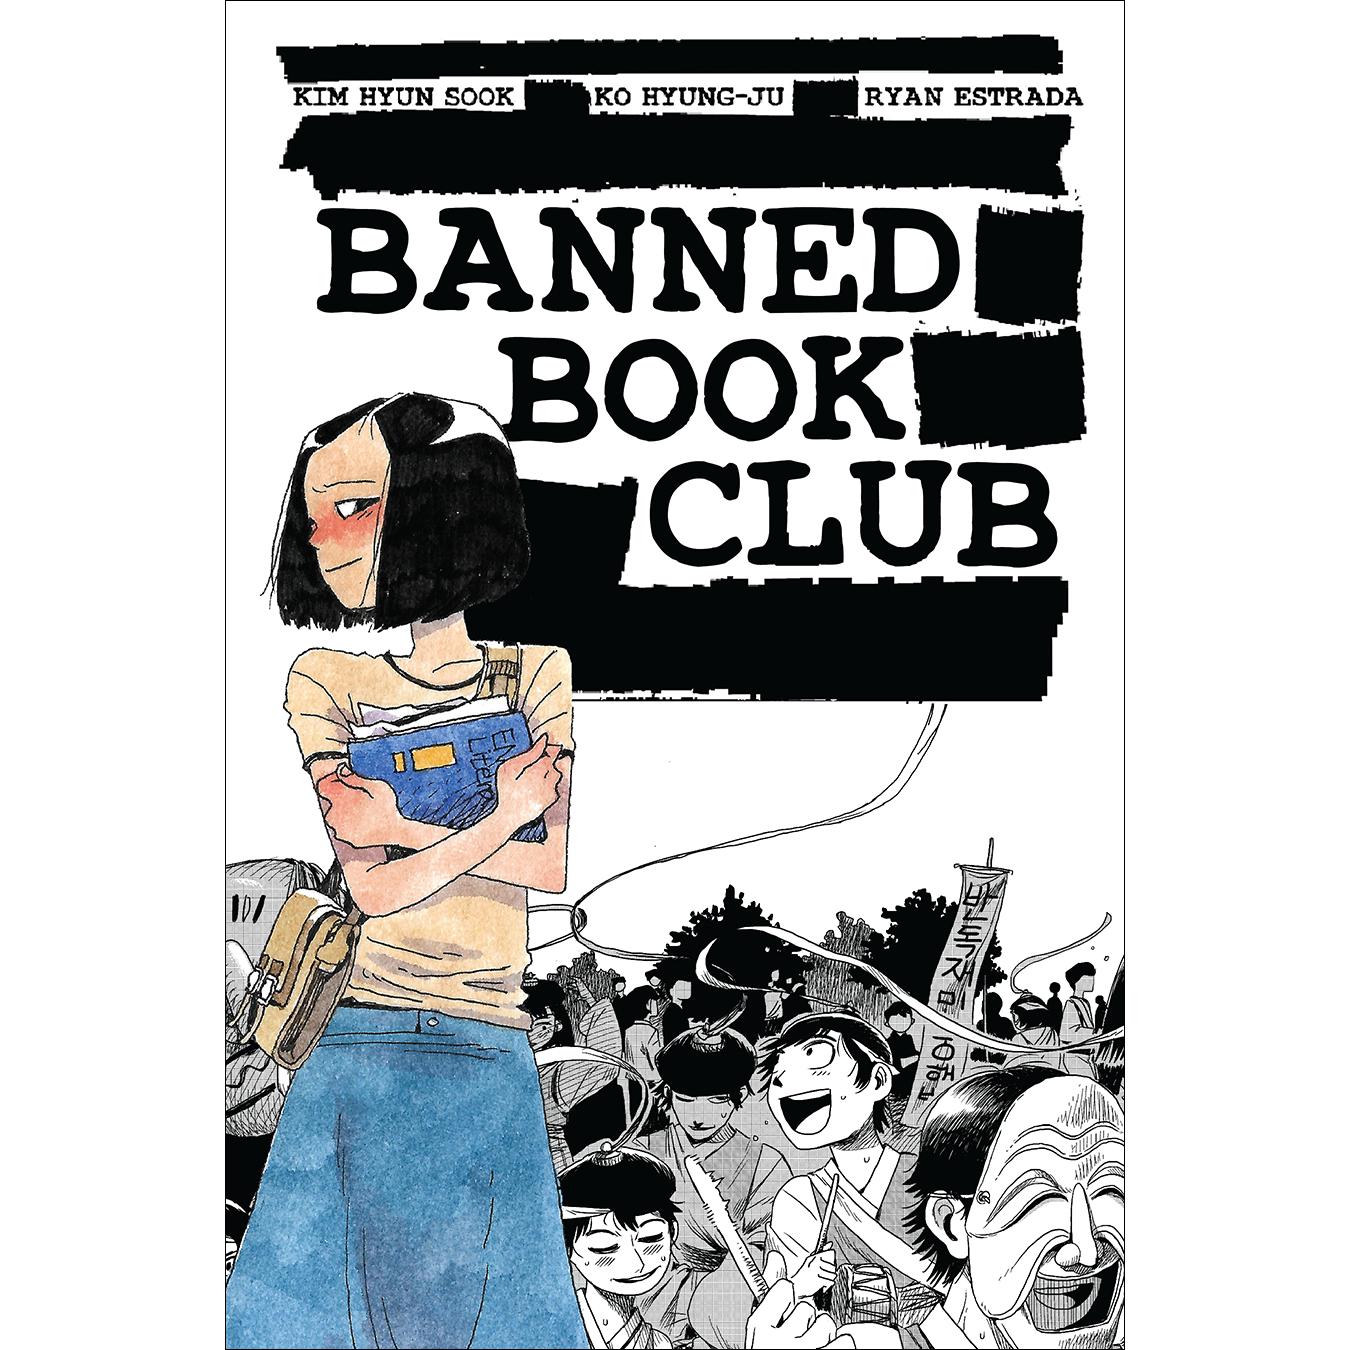 Banned book club